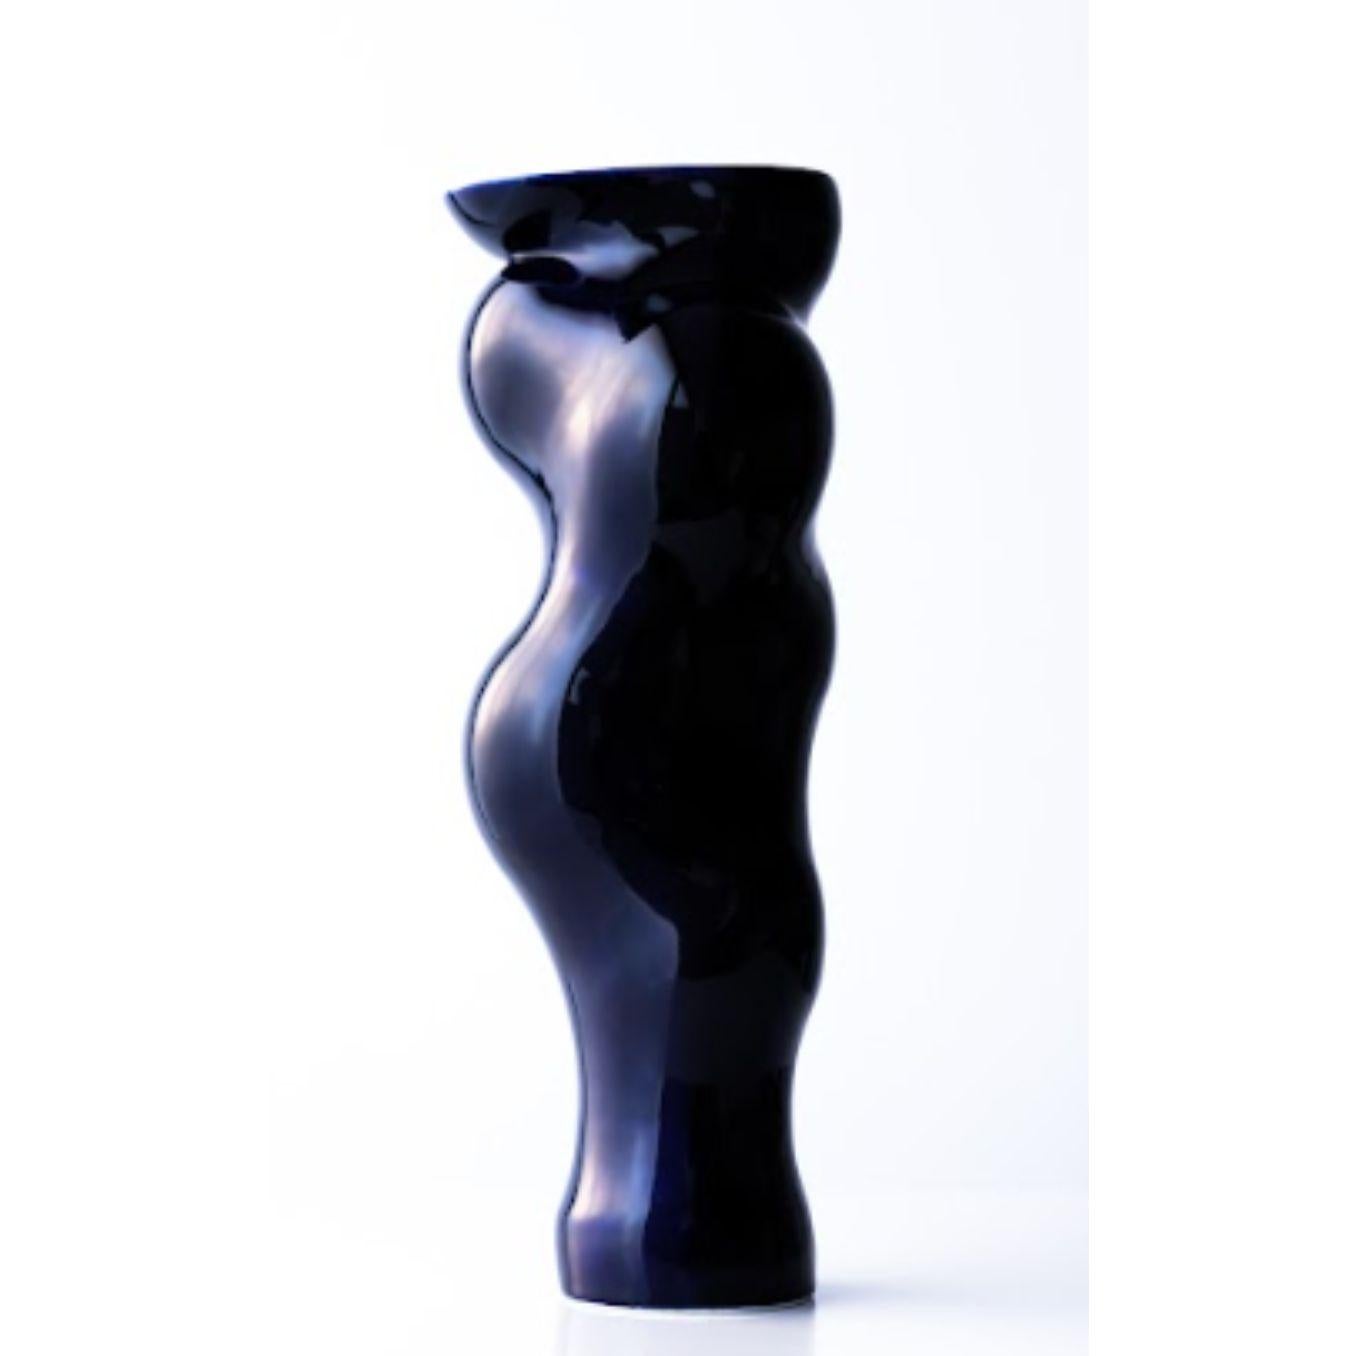 Arkadiusz Szwed guts Female by Nów
Designed by Arkadiusz Szwed
Dimensions: D 15 x W 15 x H 39 cm
Materials: glazed porcelain, cobalt


Artist, designer, professor. He represents a generation of ceramists who believe that the technological